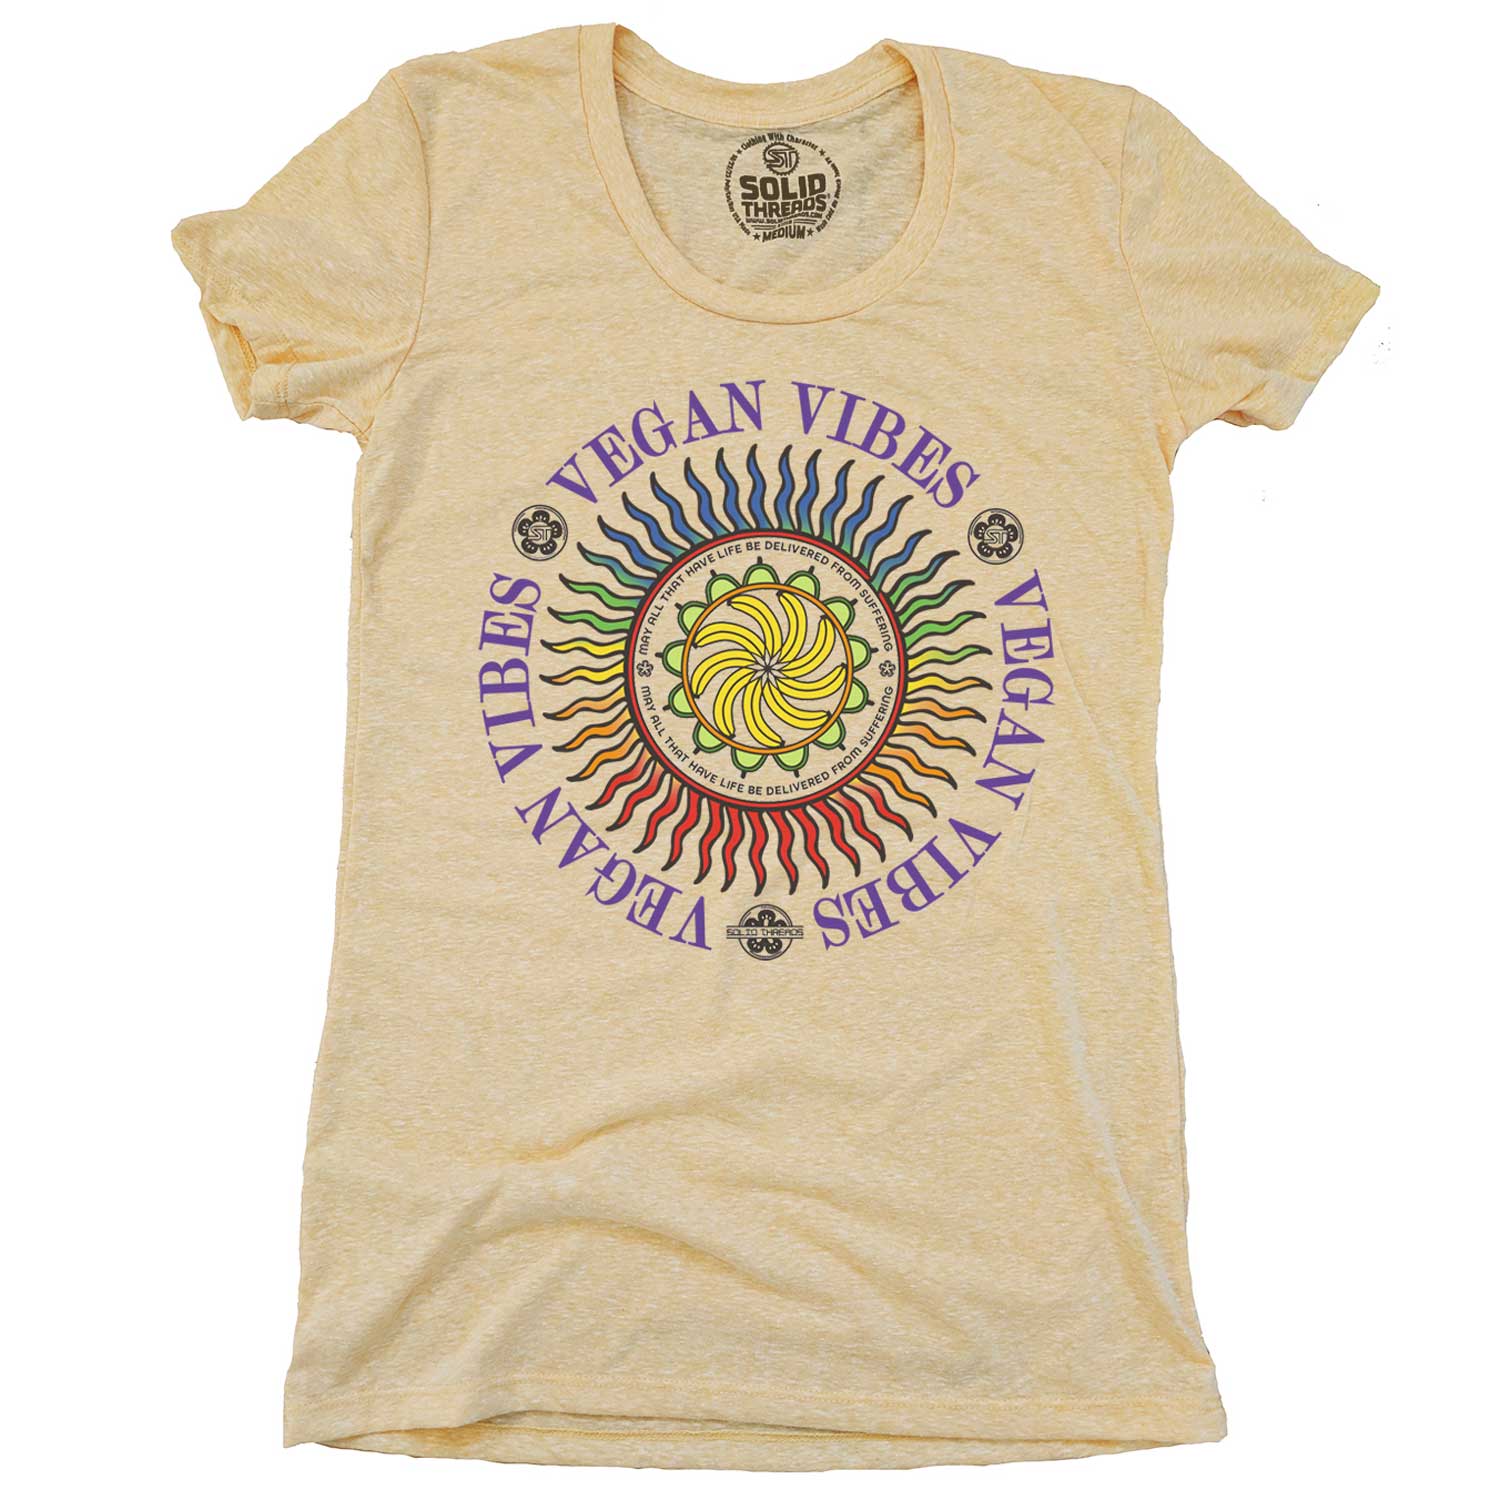 Women's Vegan Vibes Cool Hippie Graphic T-Shirt | Vintage Vegetarian Tee | Solid Threads